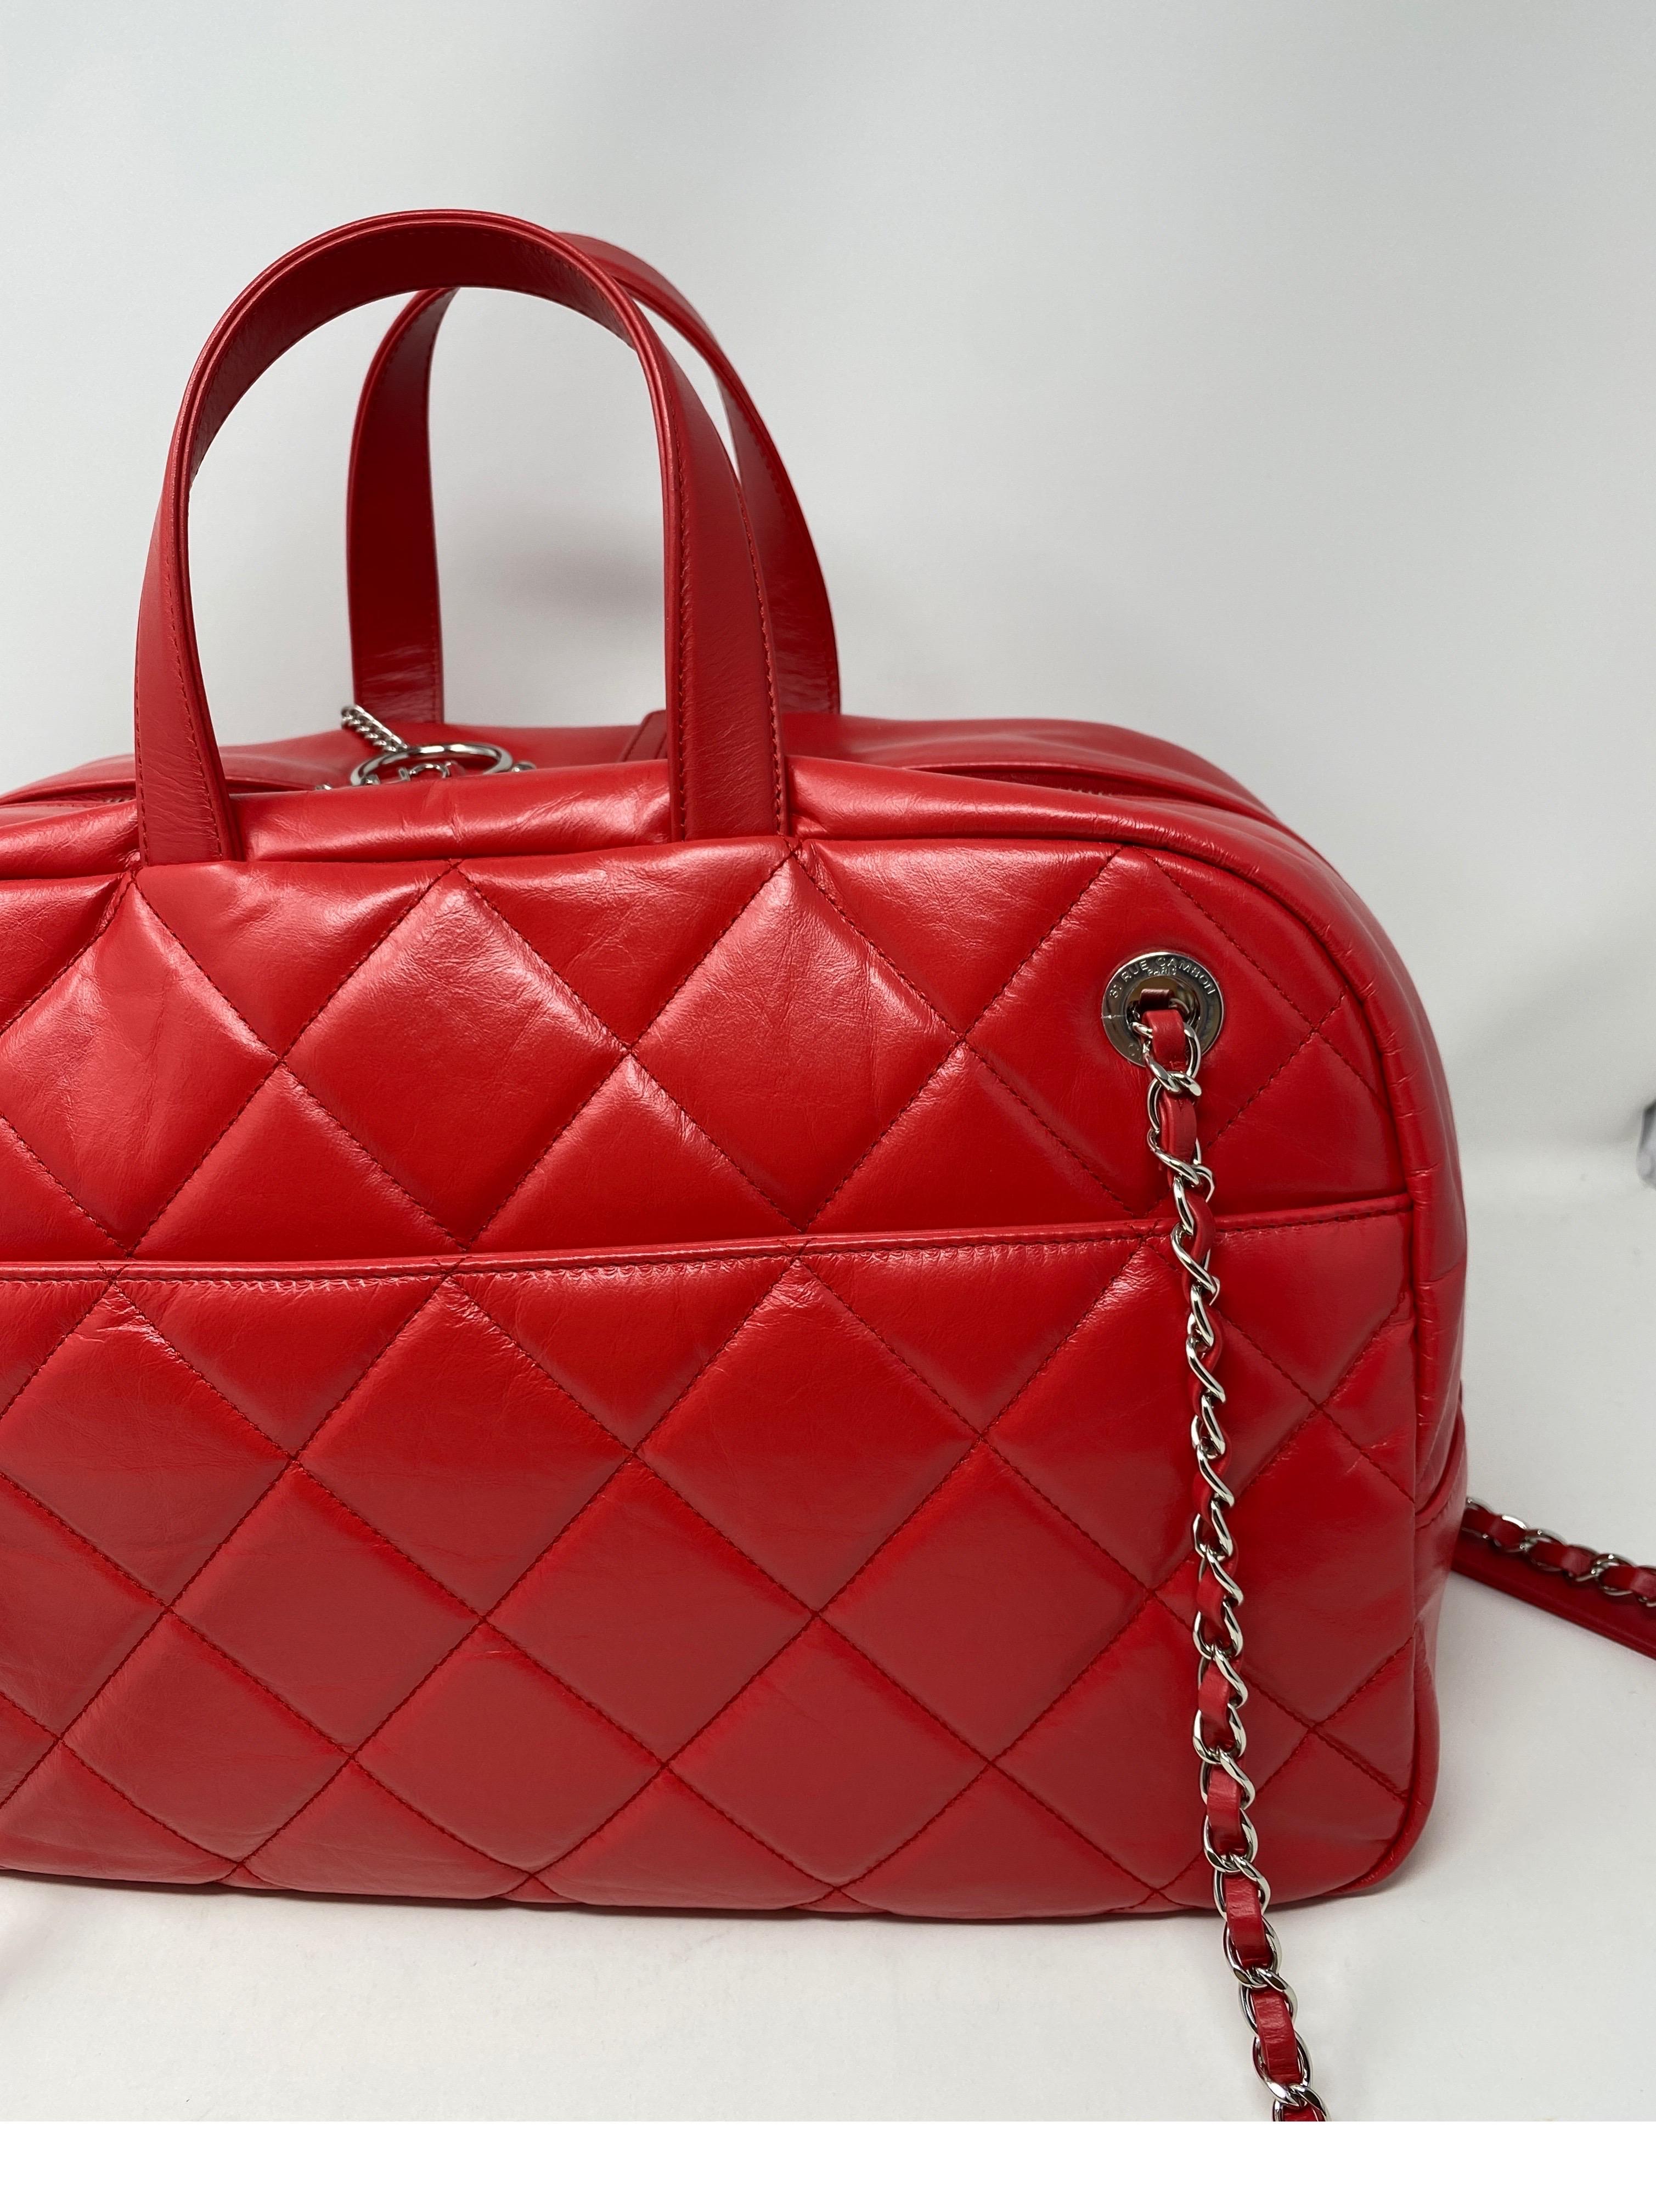 Chanel Large Red Bowler Bag  4